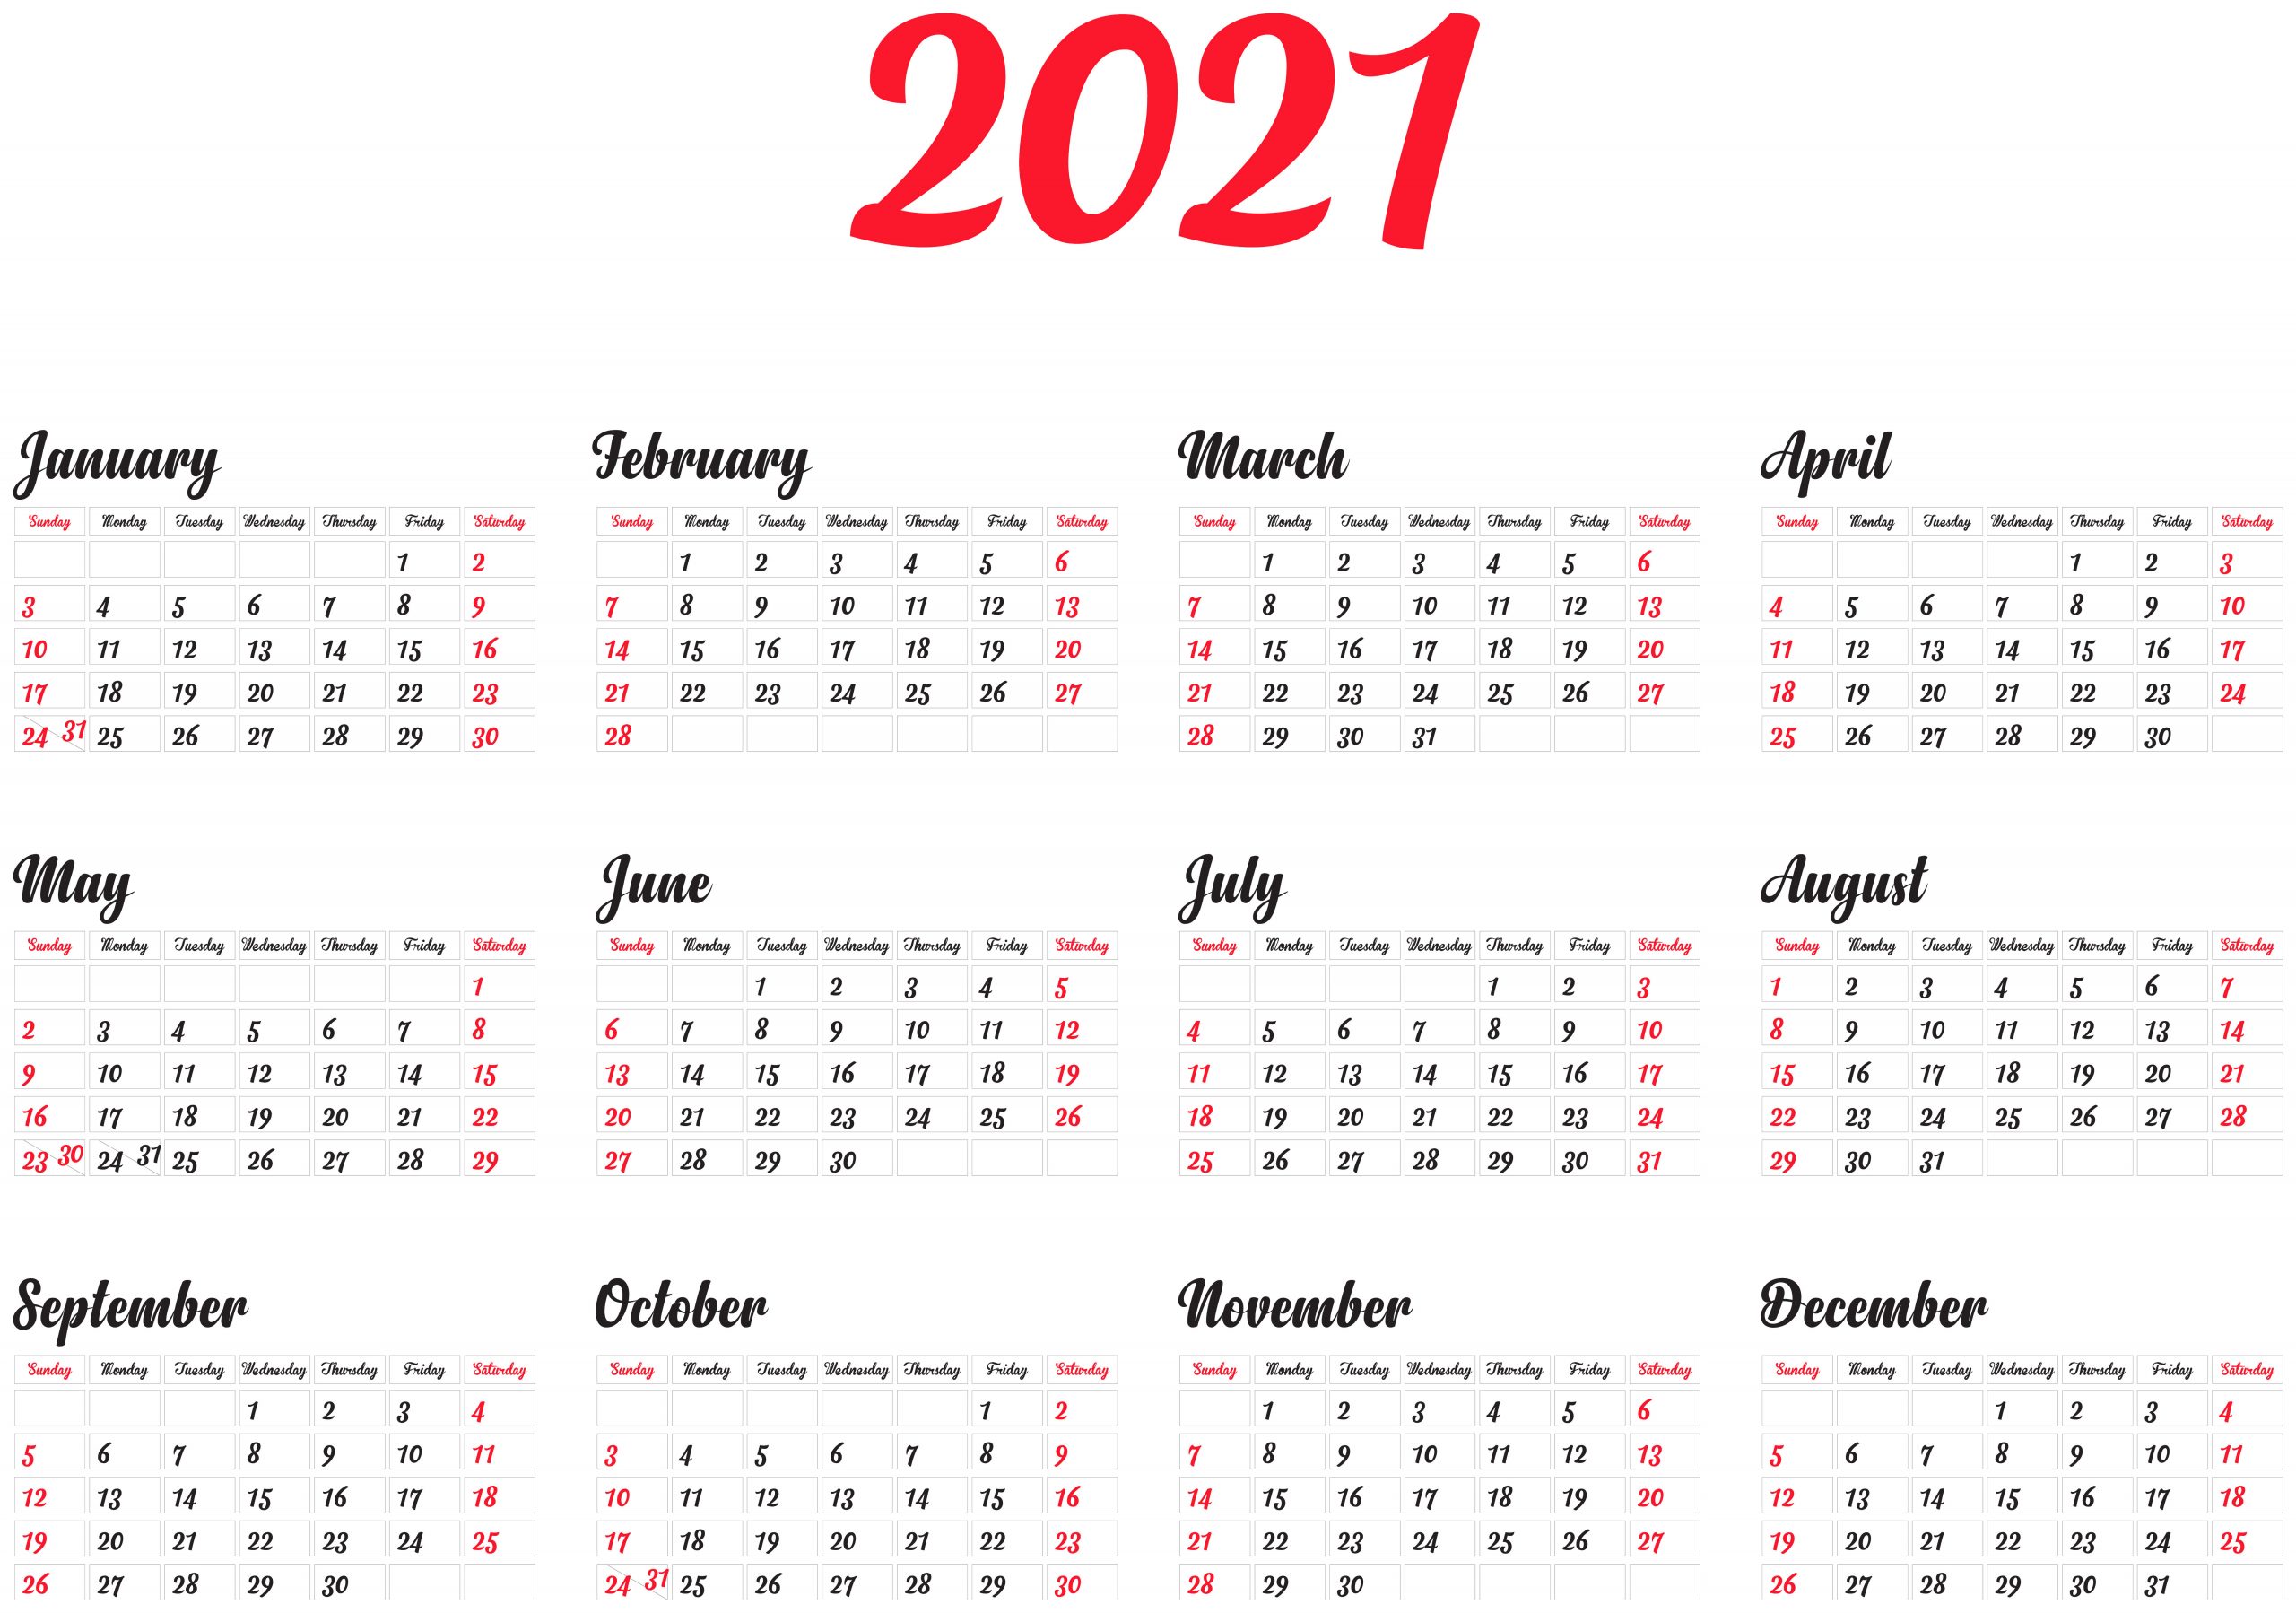 2021 calendar hd images